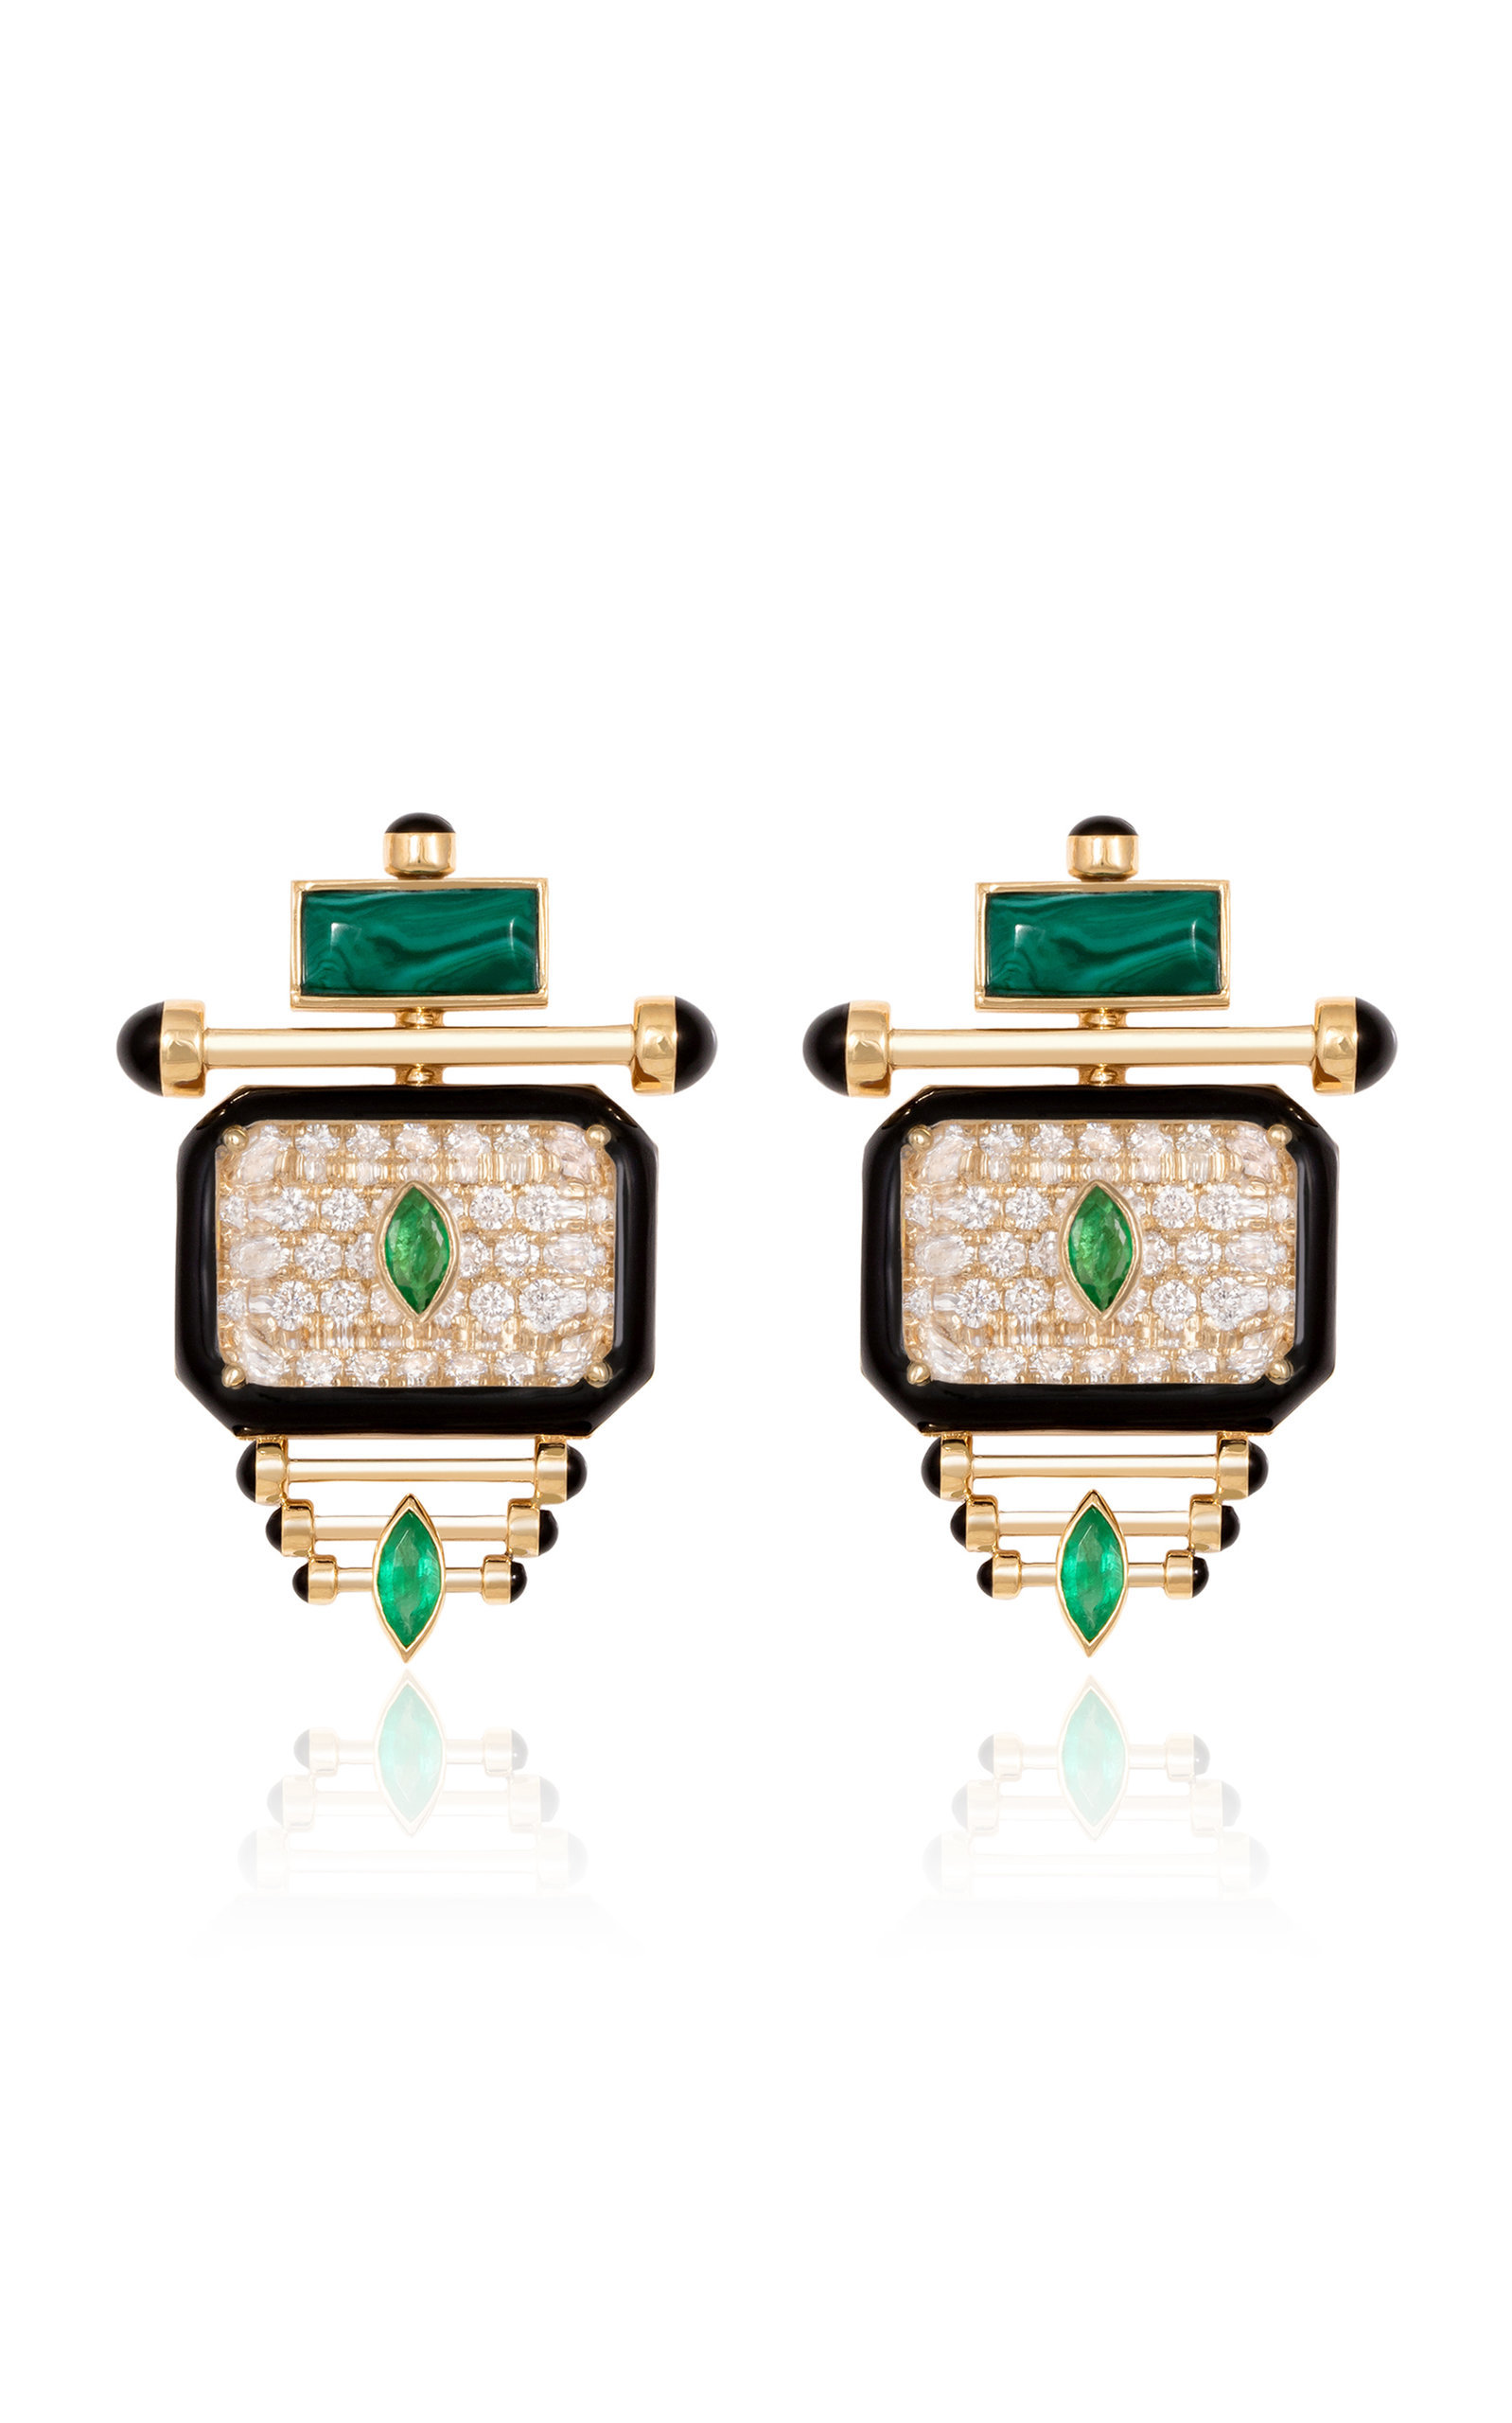 The Qabila Moment 18K Yellow Gold Diamond; Emerald Earrings